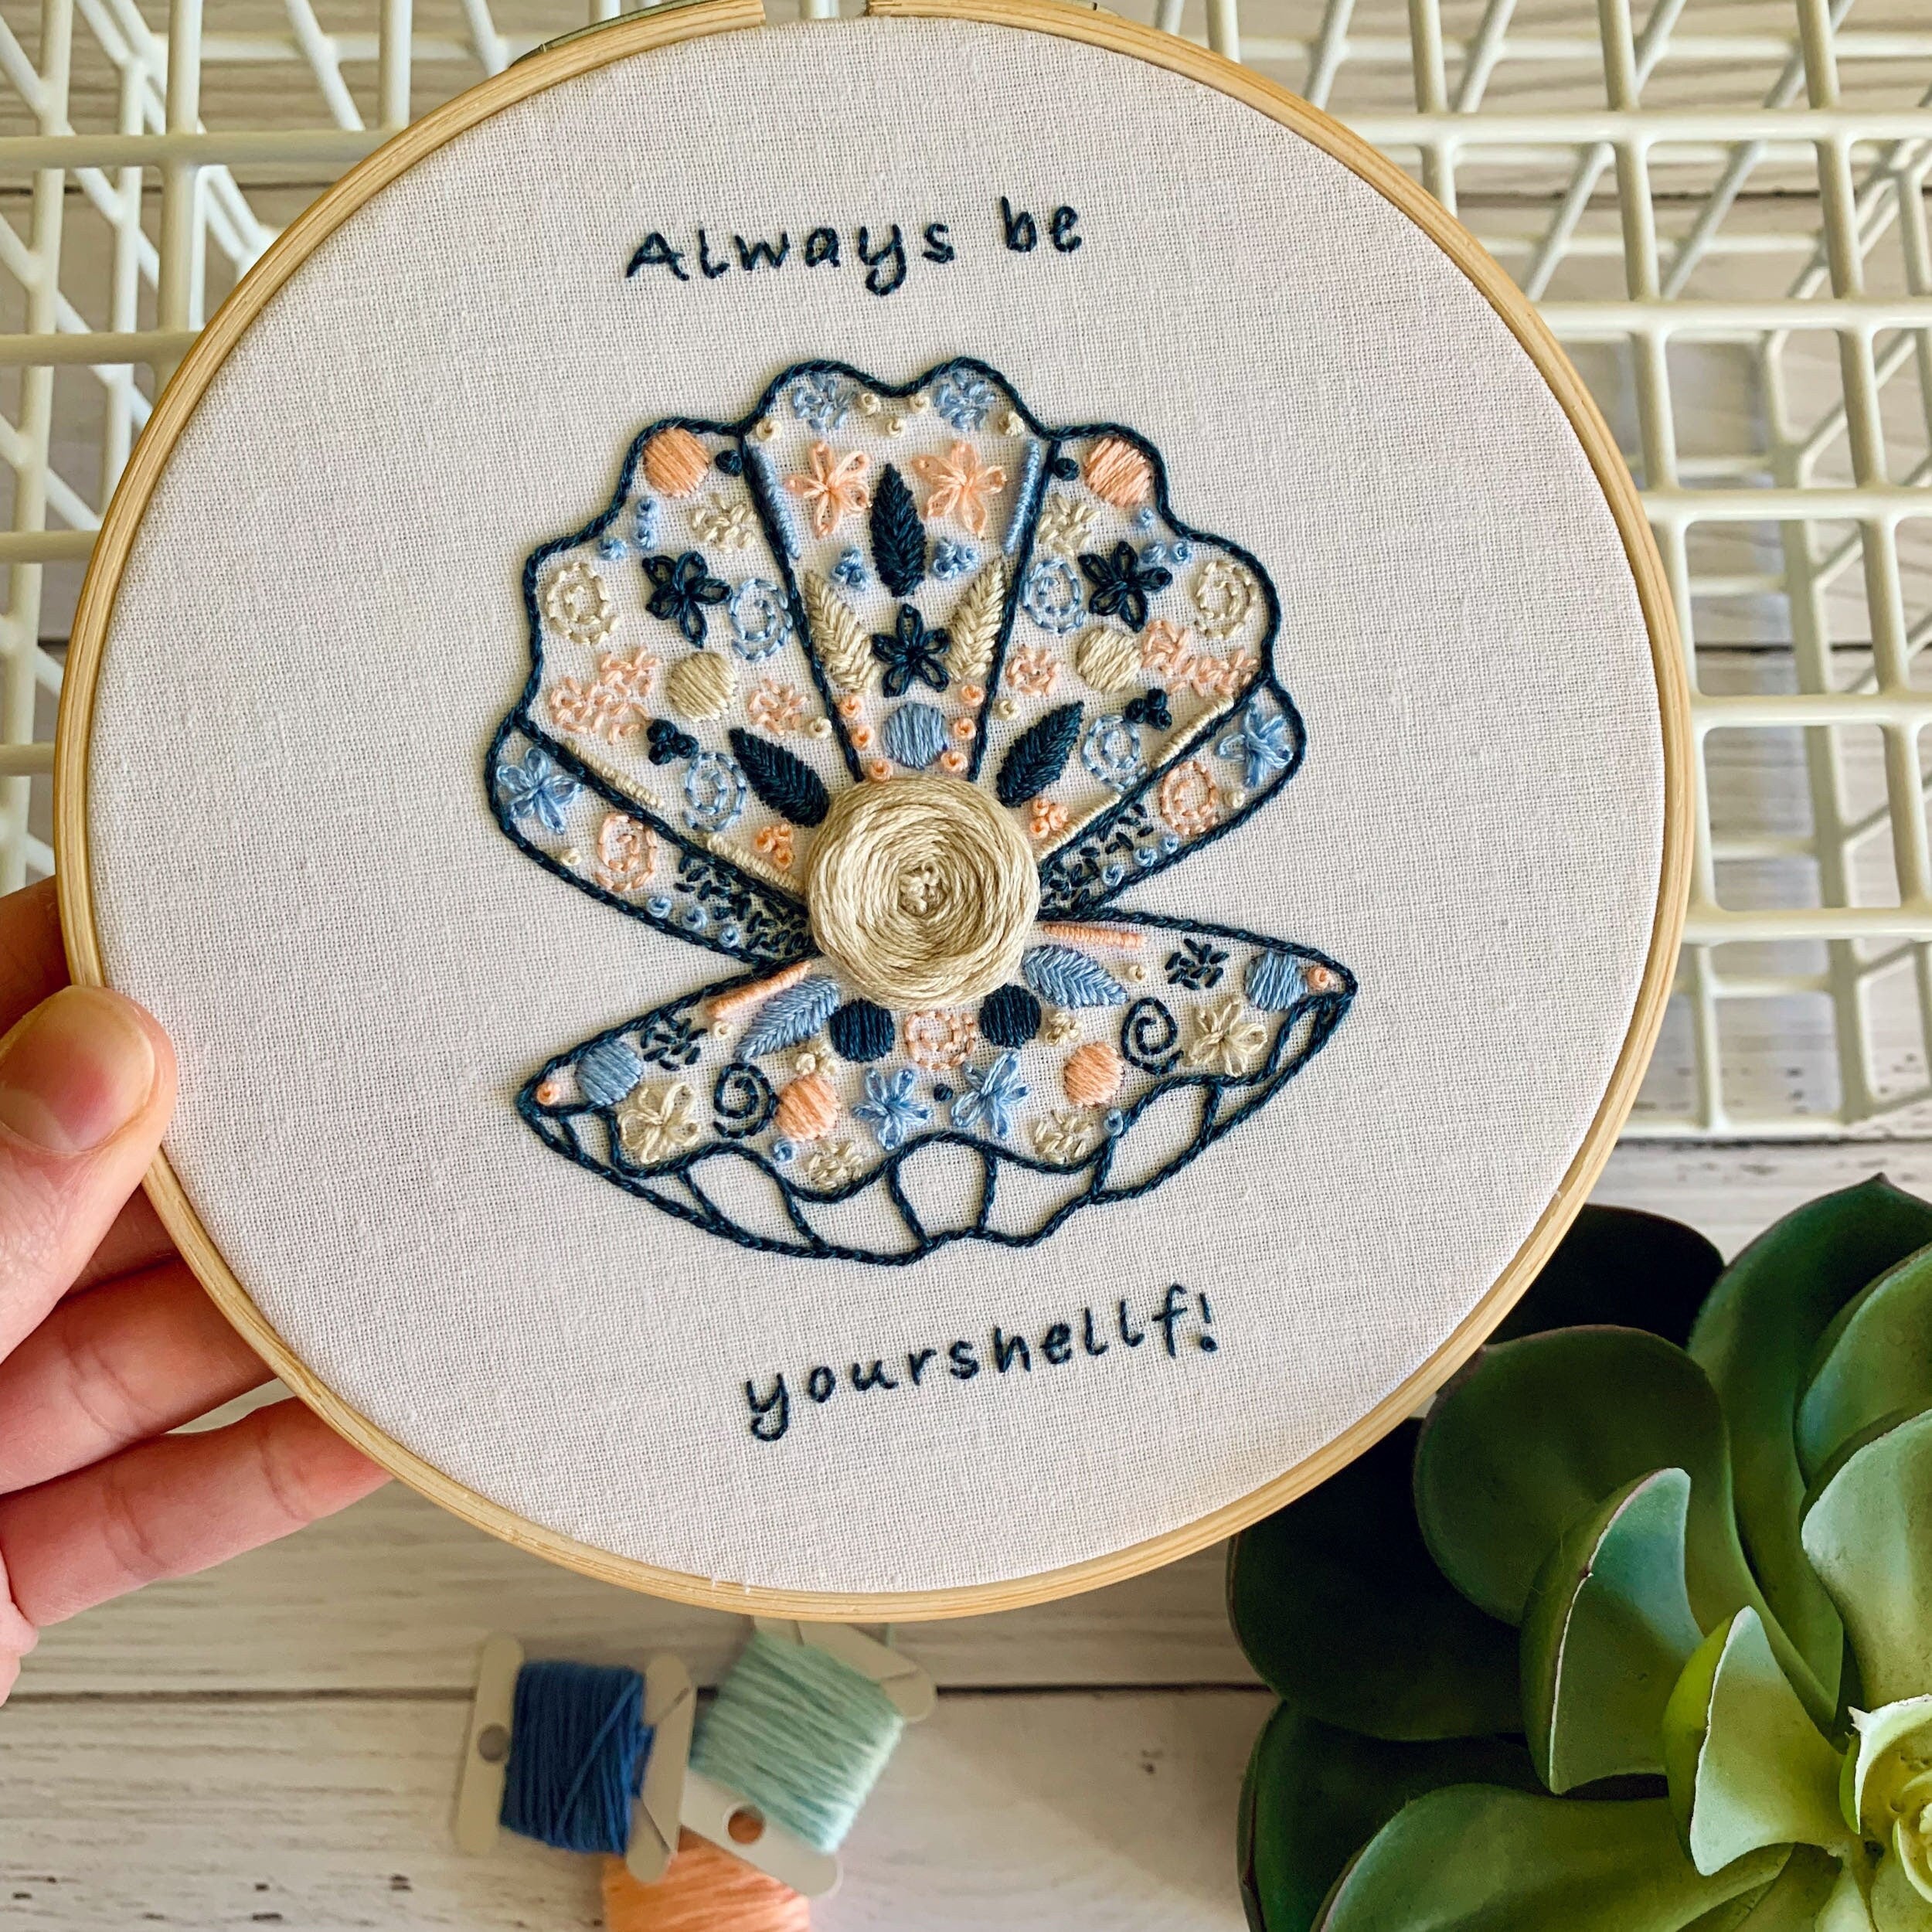 Full Embroidery Kit. Jellyfish DIY Beginner Hoop Art Craft. Adult